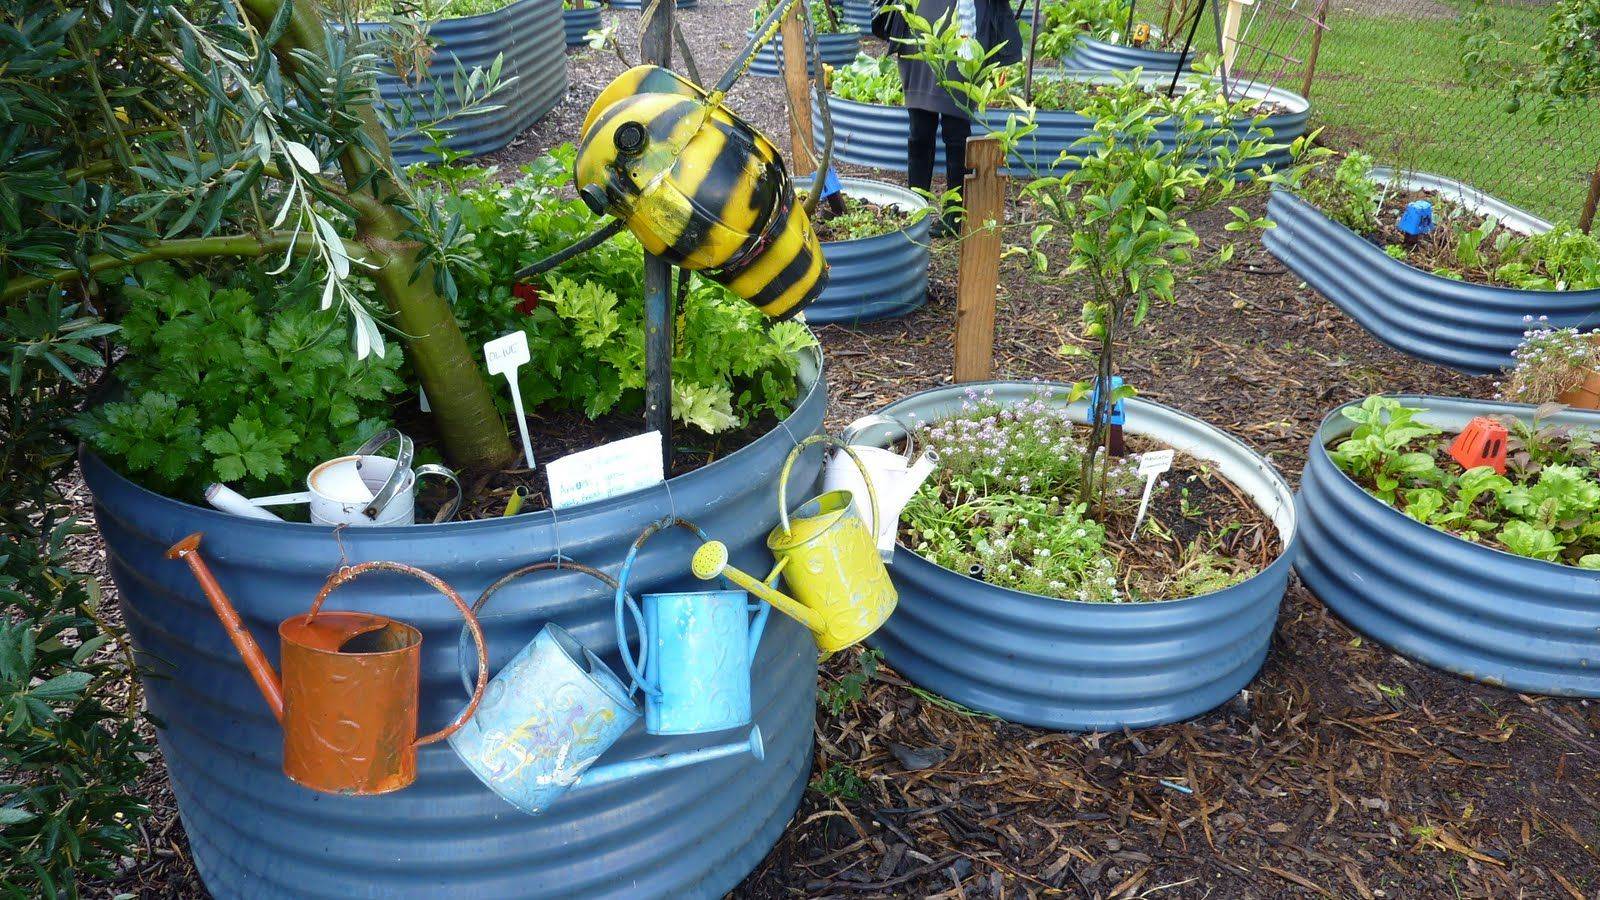 Chimborazo Elementary Schools Teaching Garden Garden Design